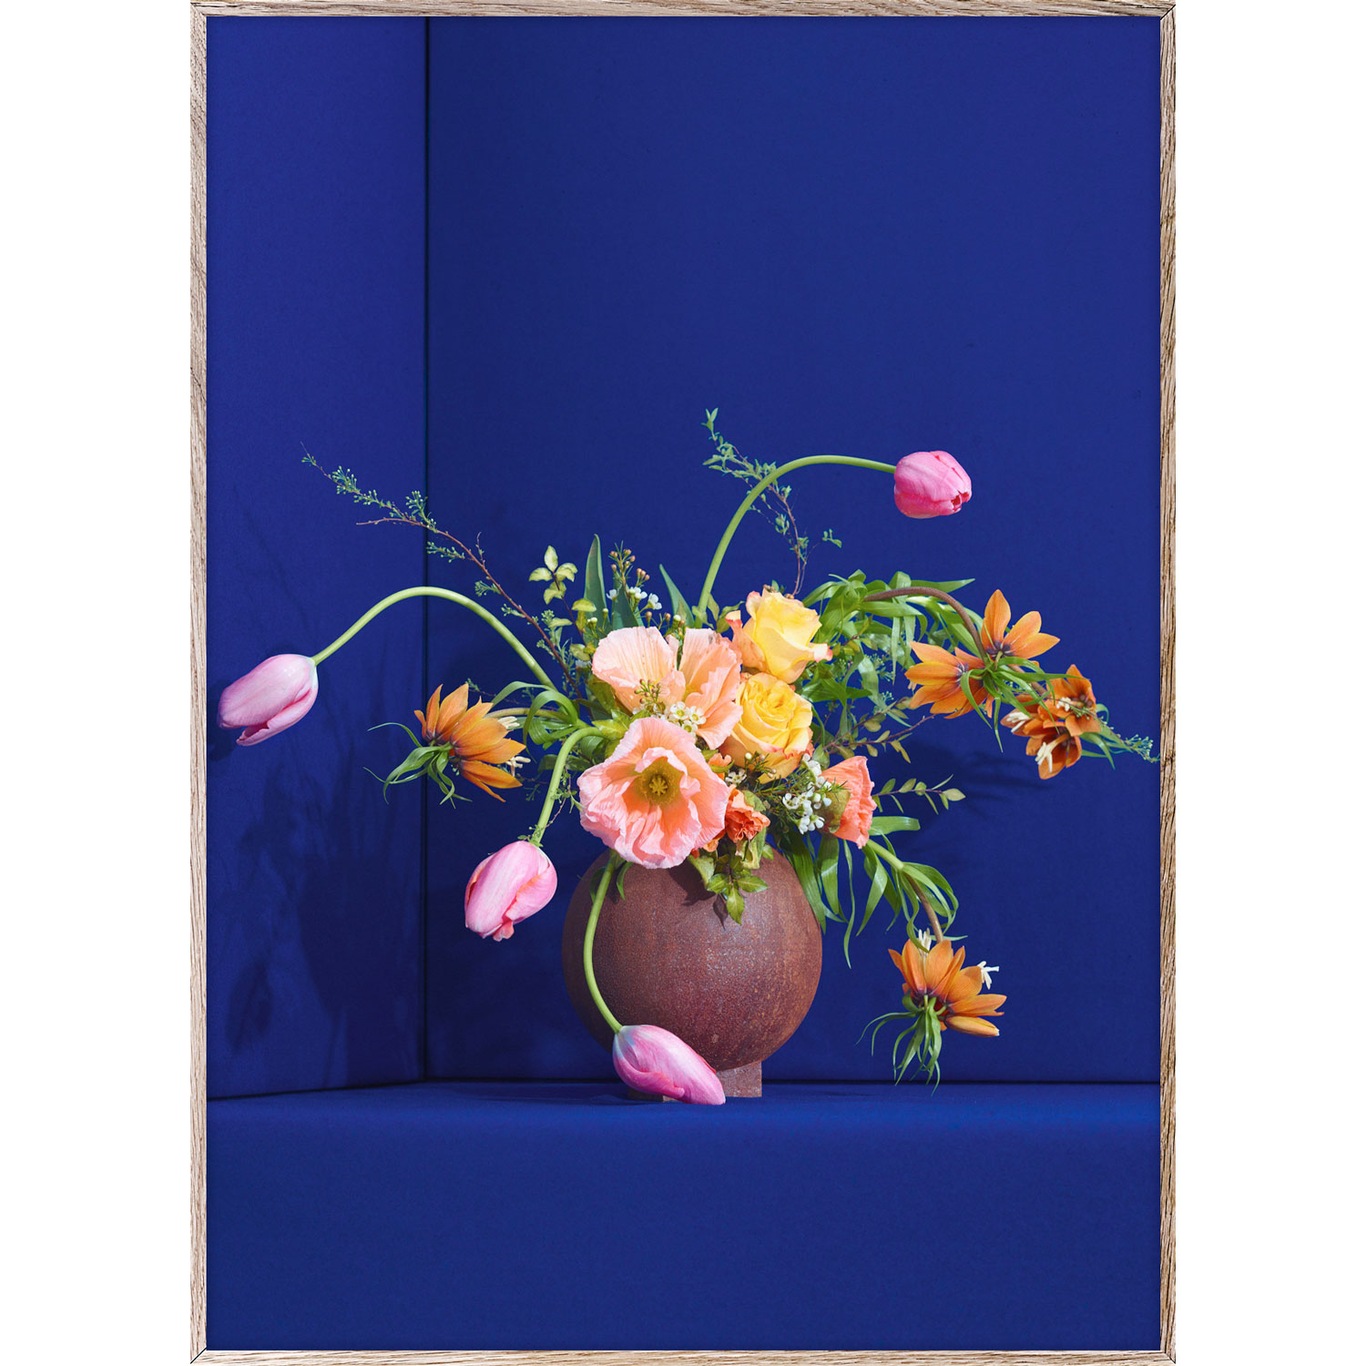 Blomst 01 Blue Poster, 30x40 cm